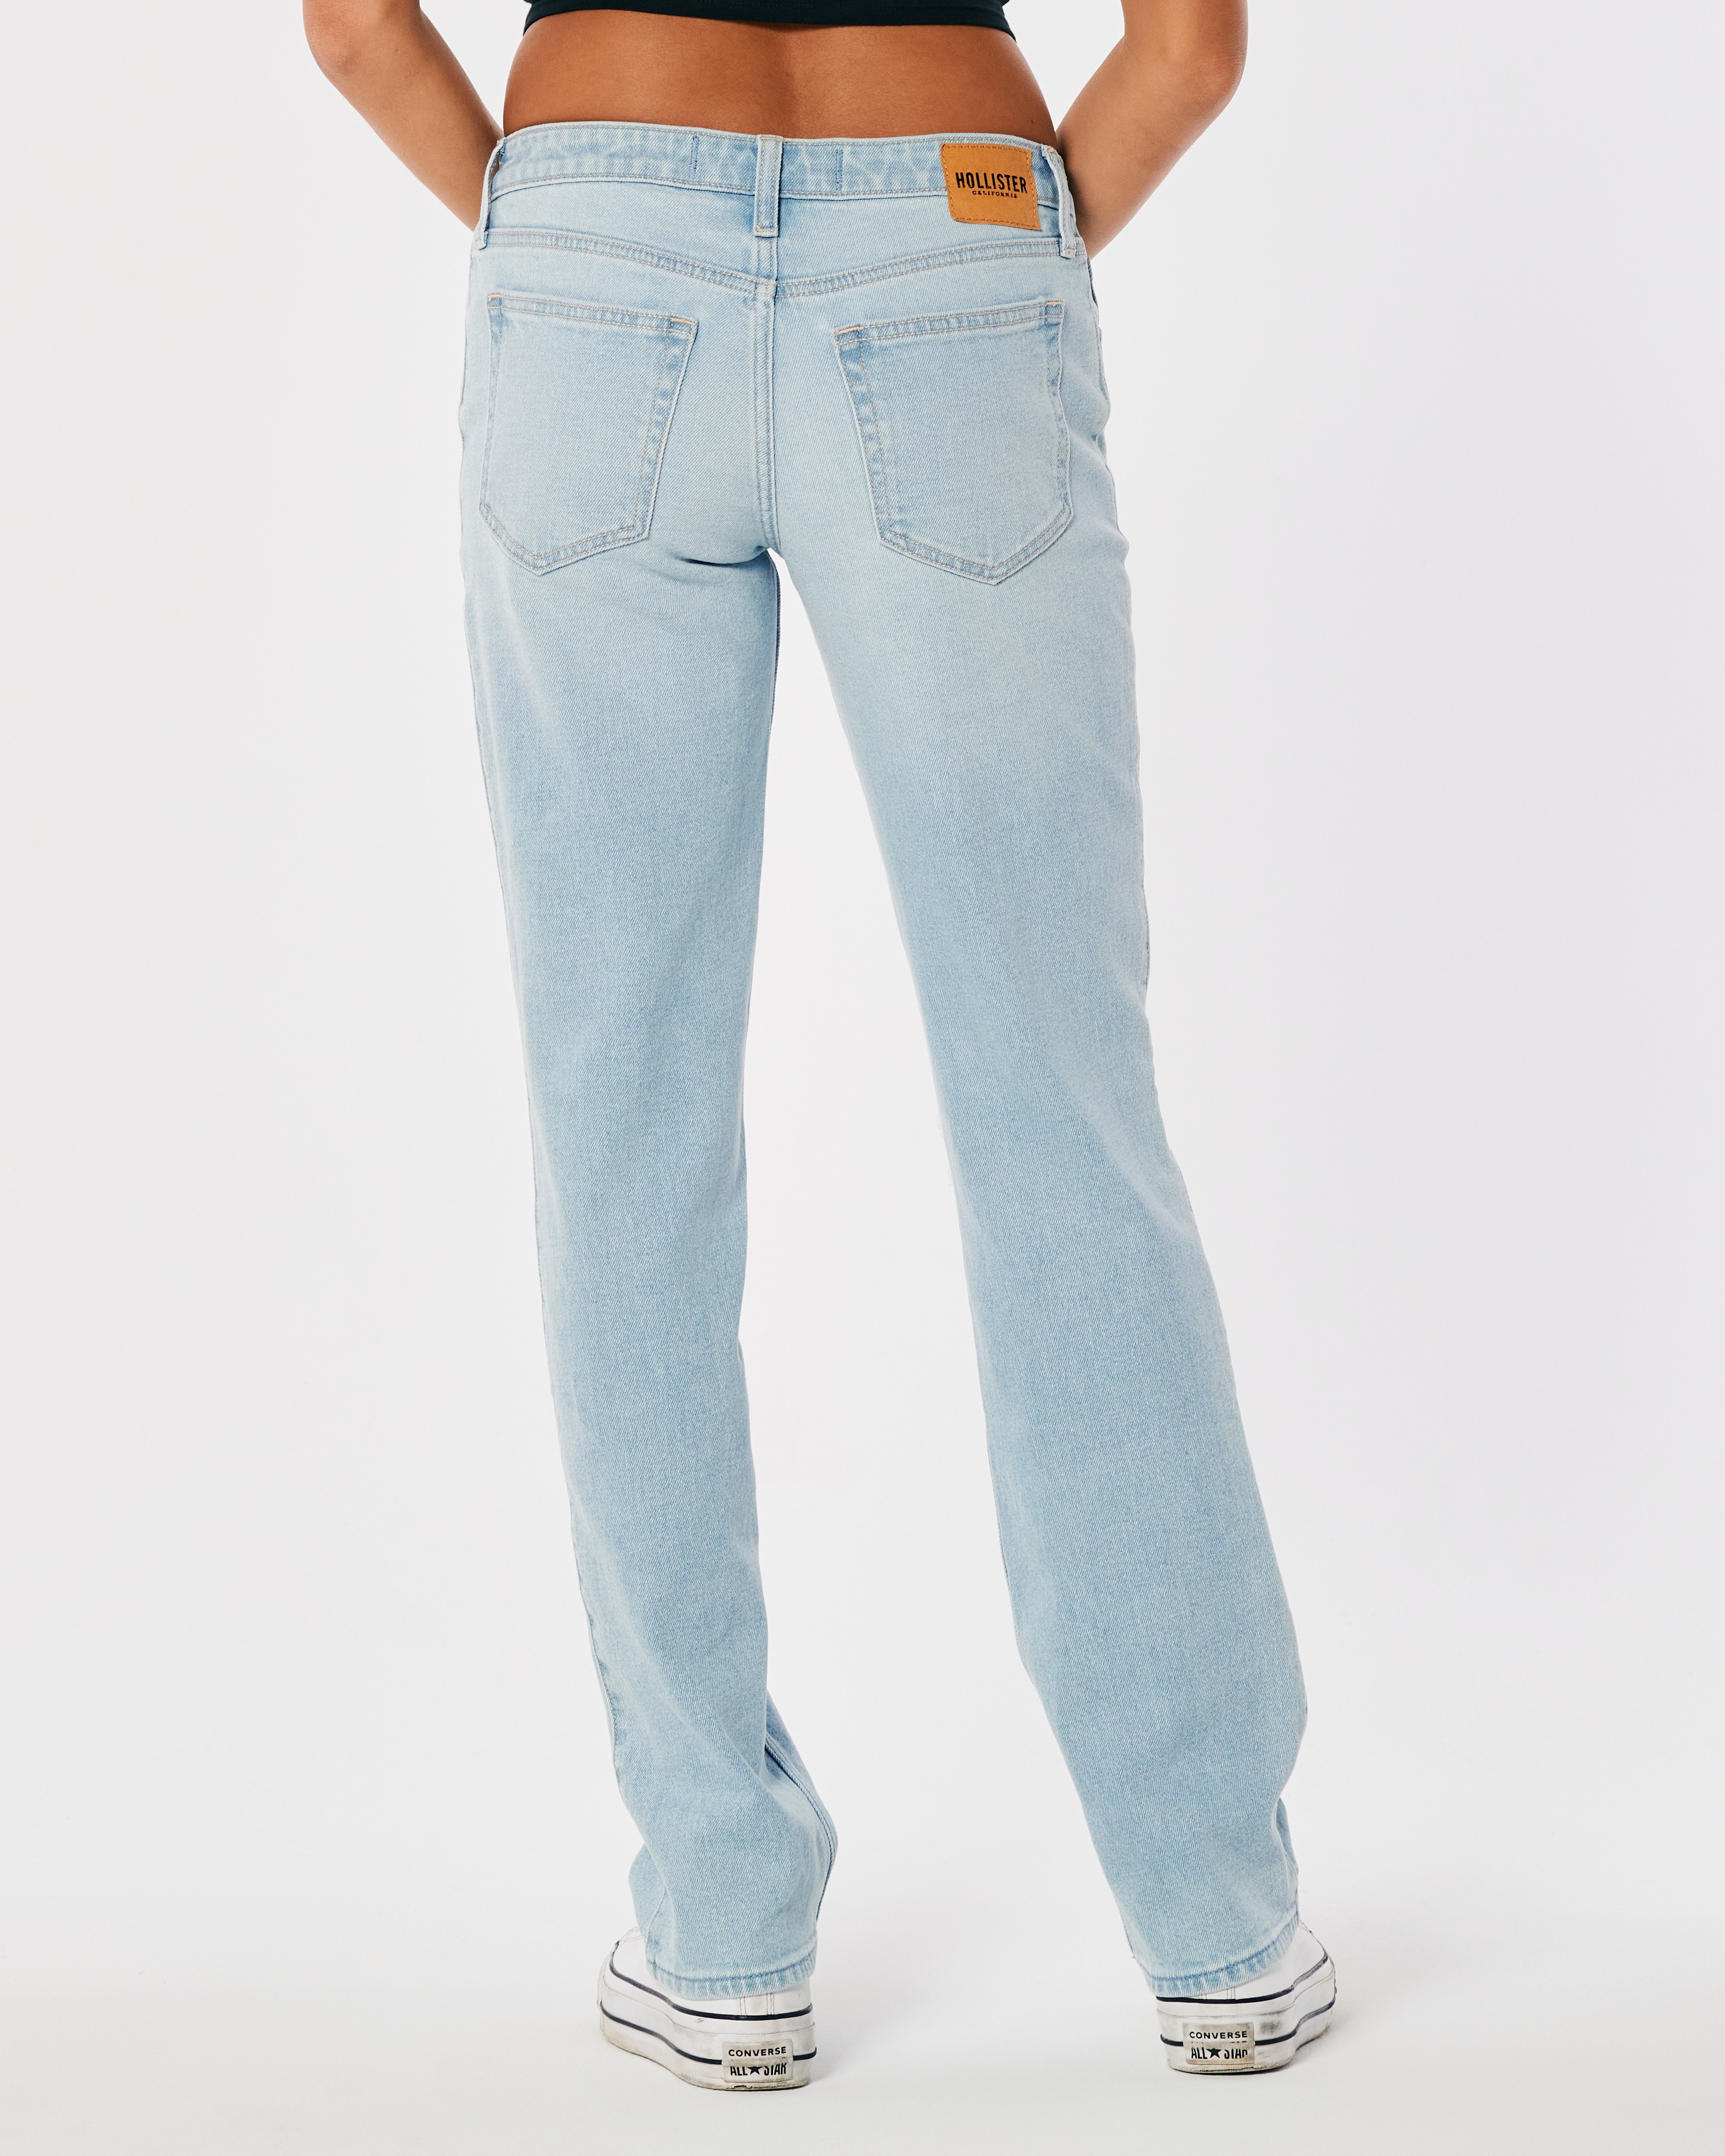 Hollister Co. Straight leg jeans - light medium wash/blue denim